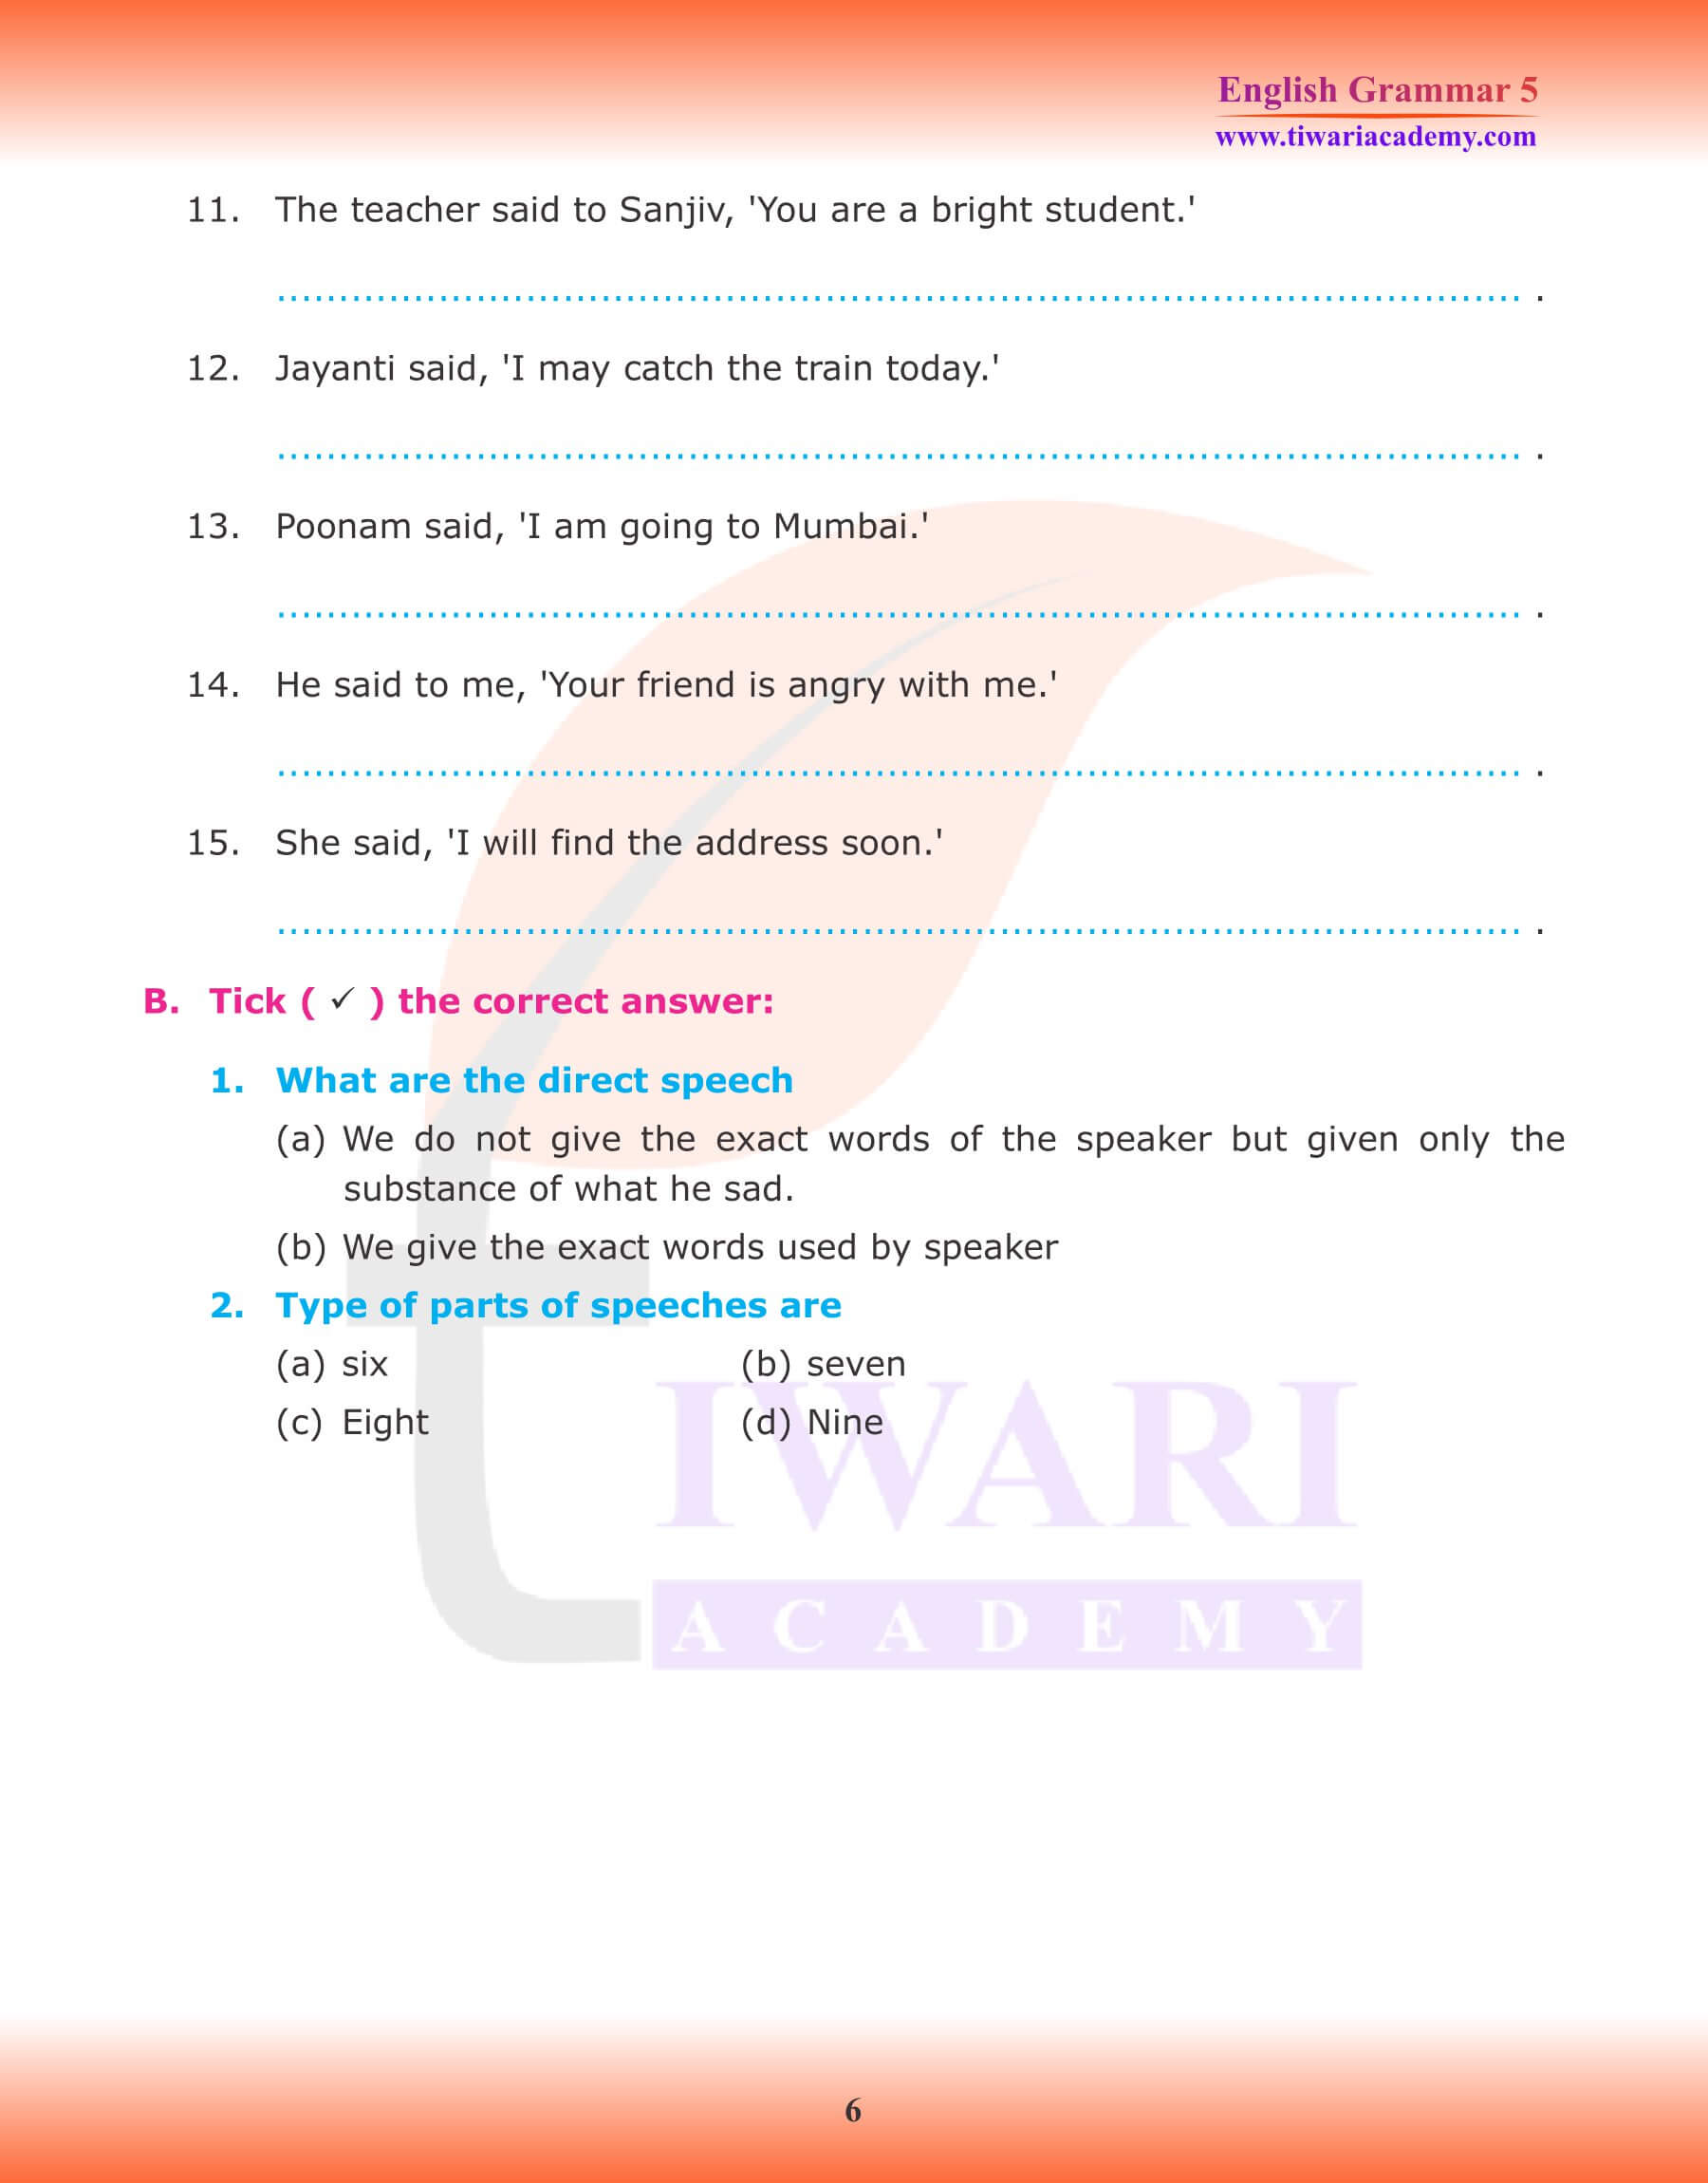 Class 5 English Grammar Reported Speech Exercises